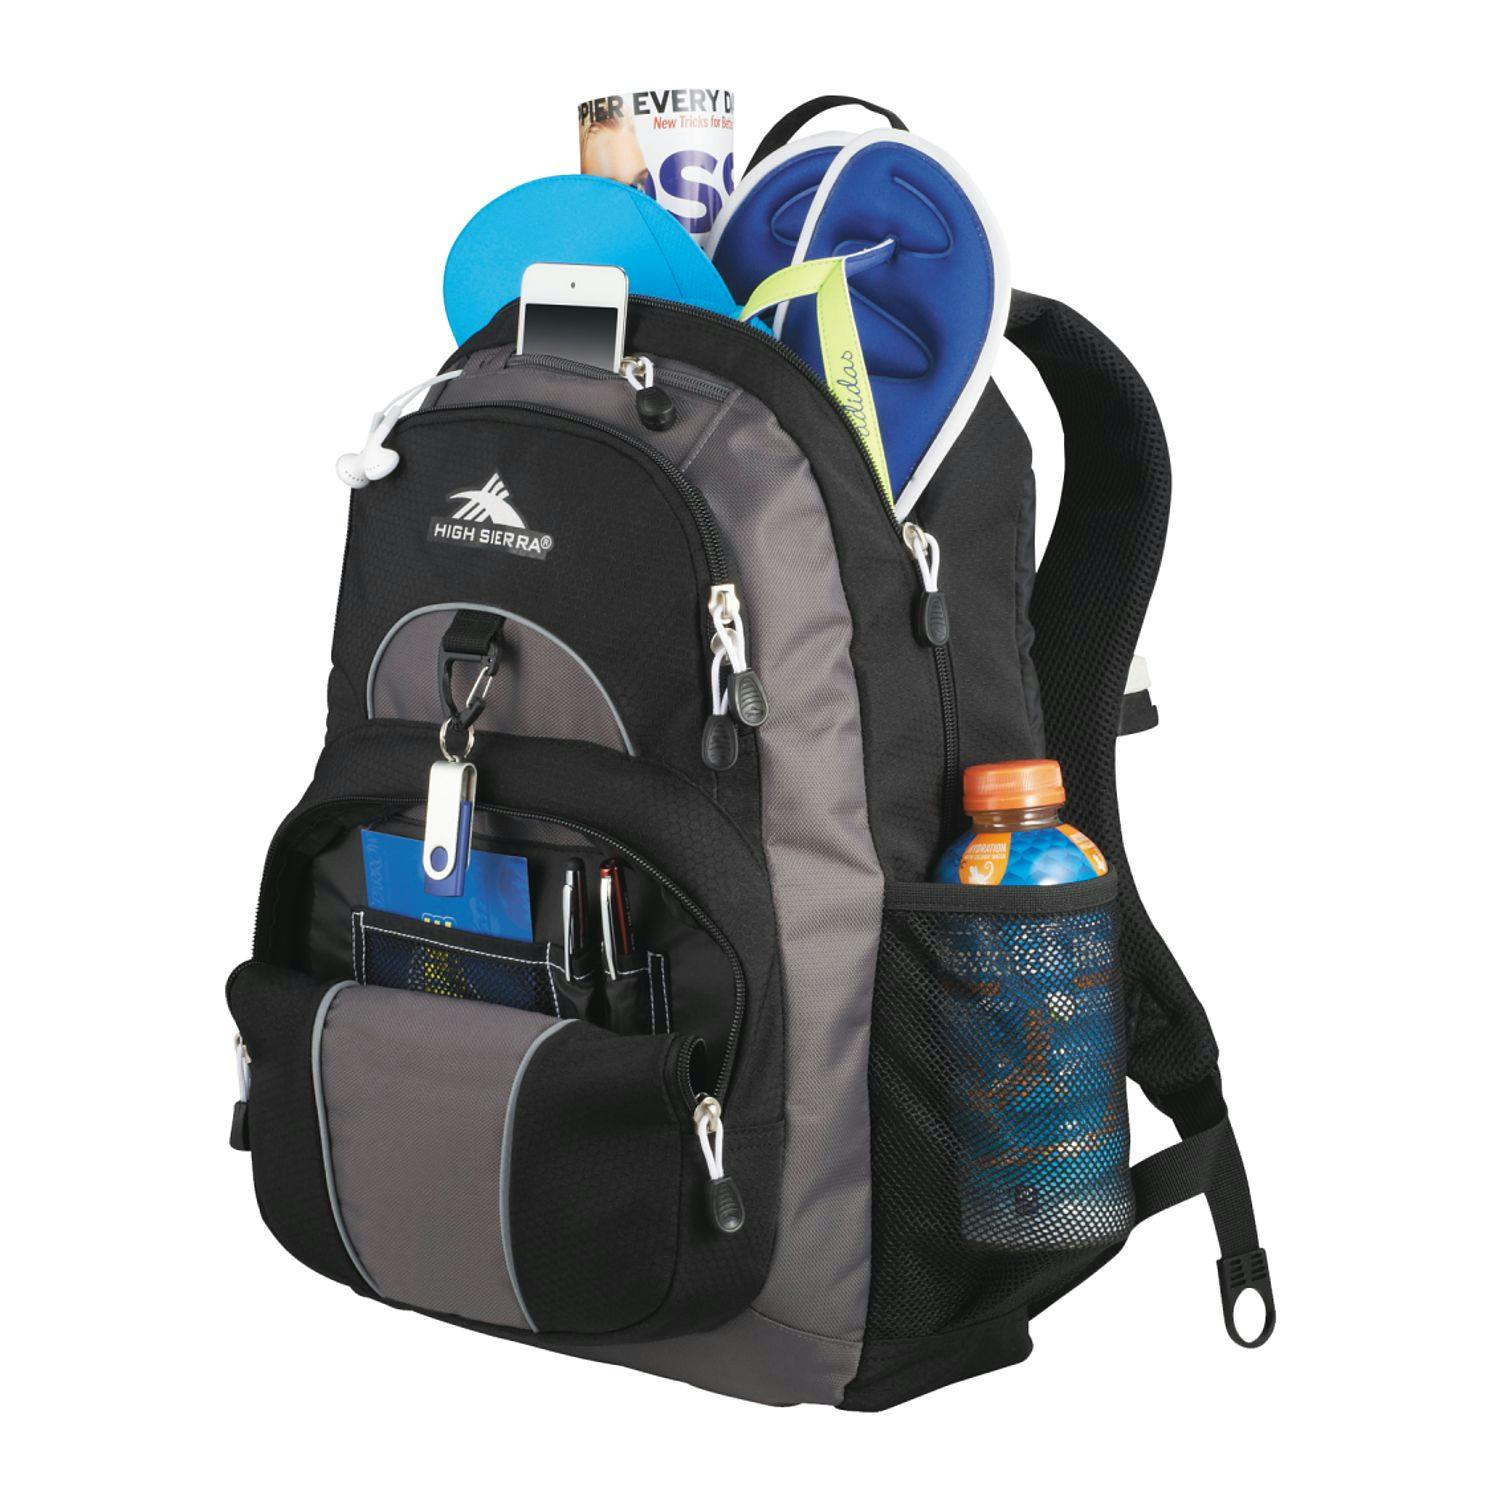 High Sierra Enzo Backpack - additional Image 1